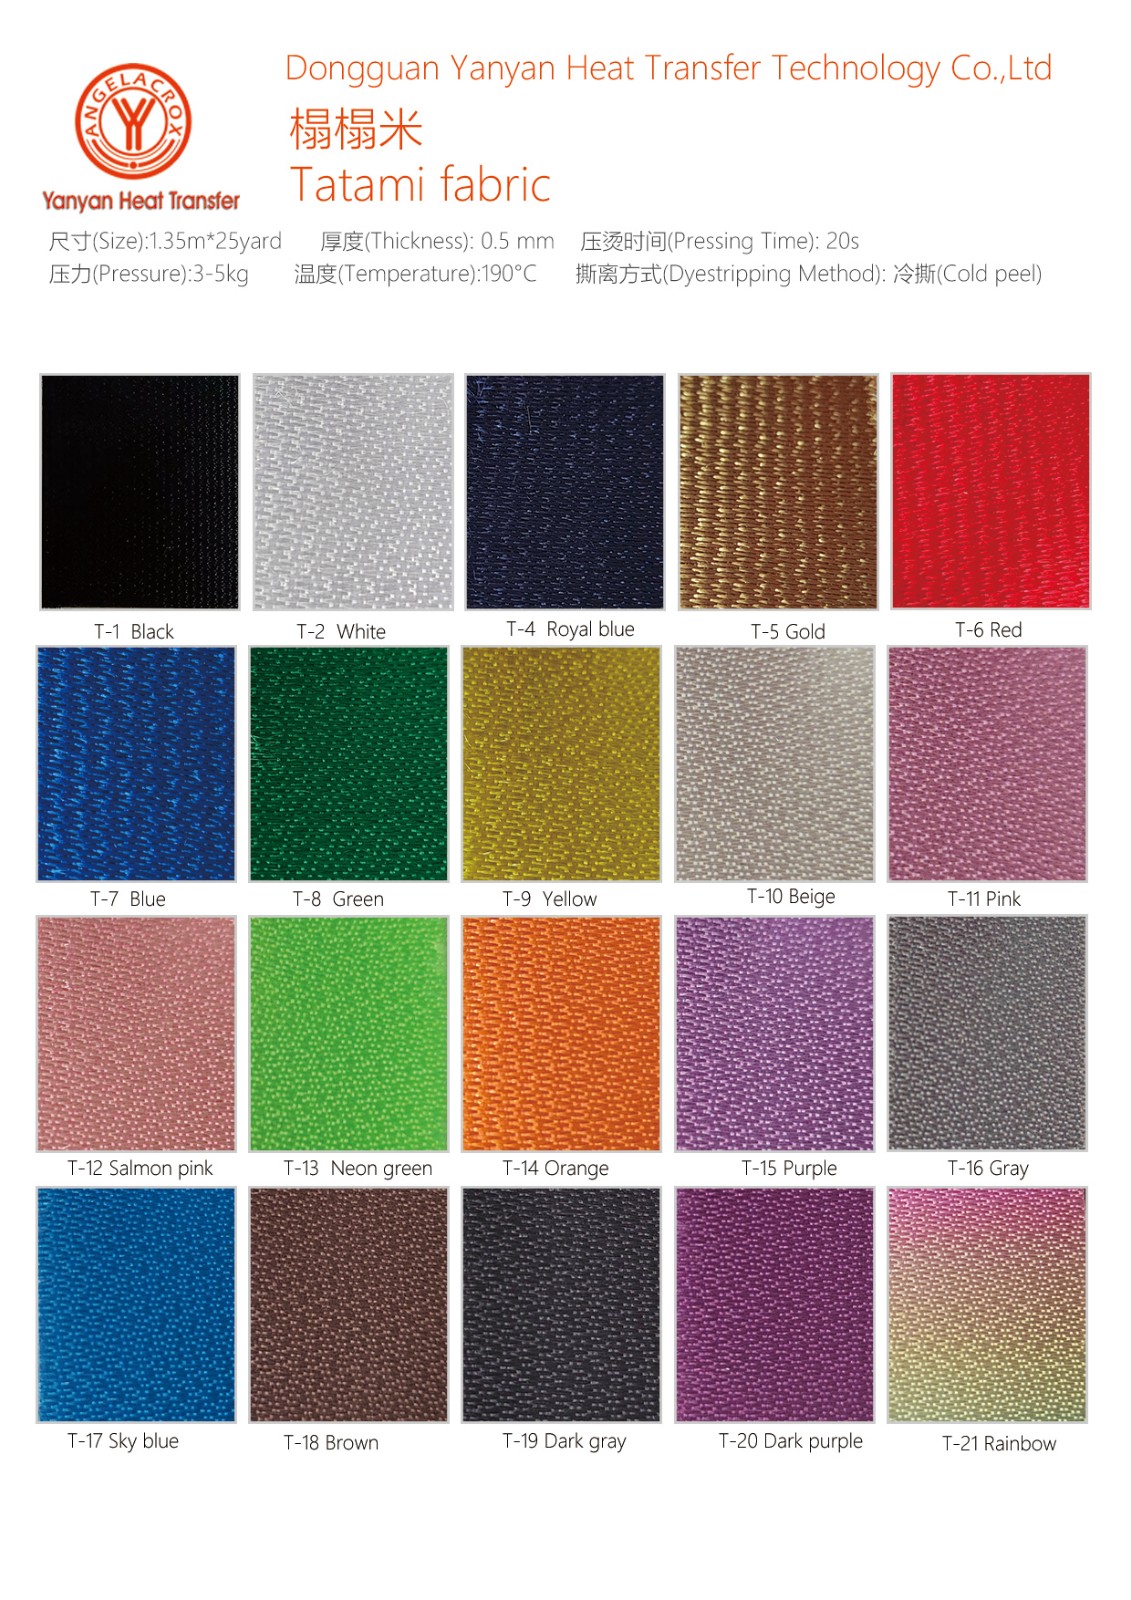 Tatami-Fabric-color-card.jpg